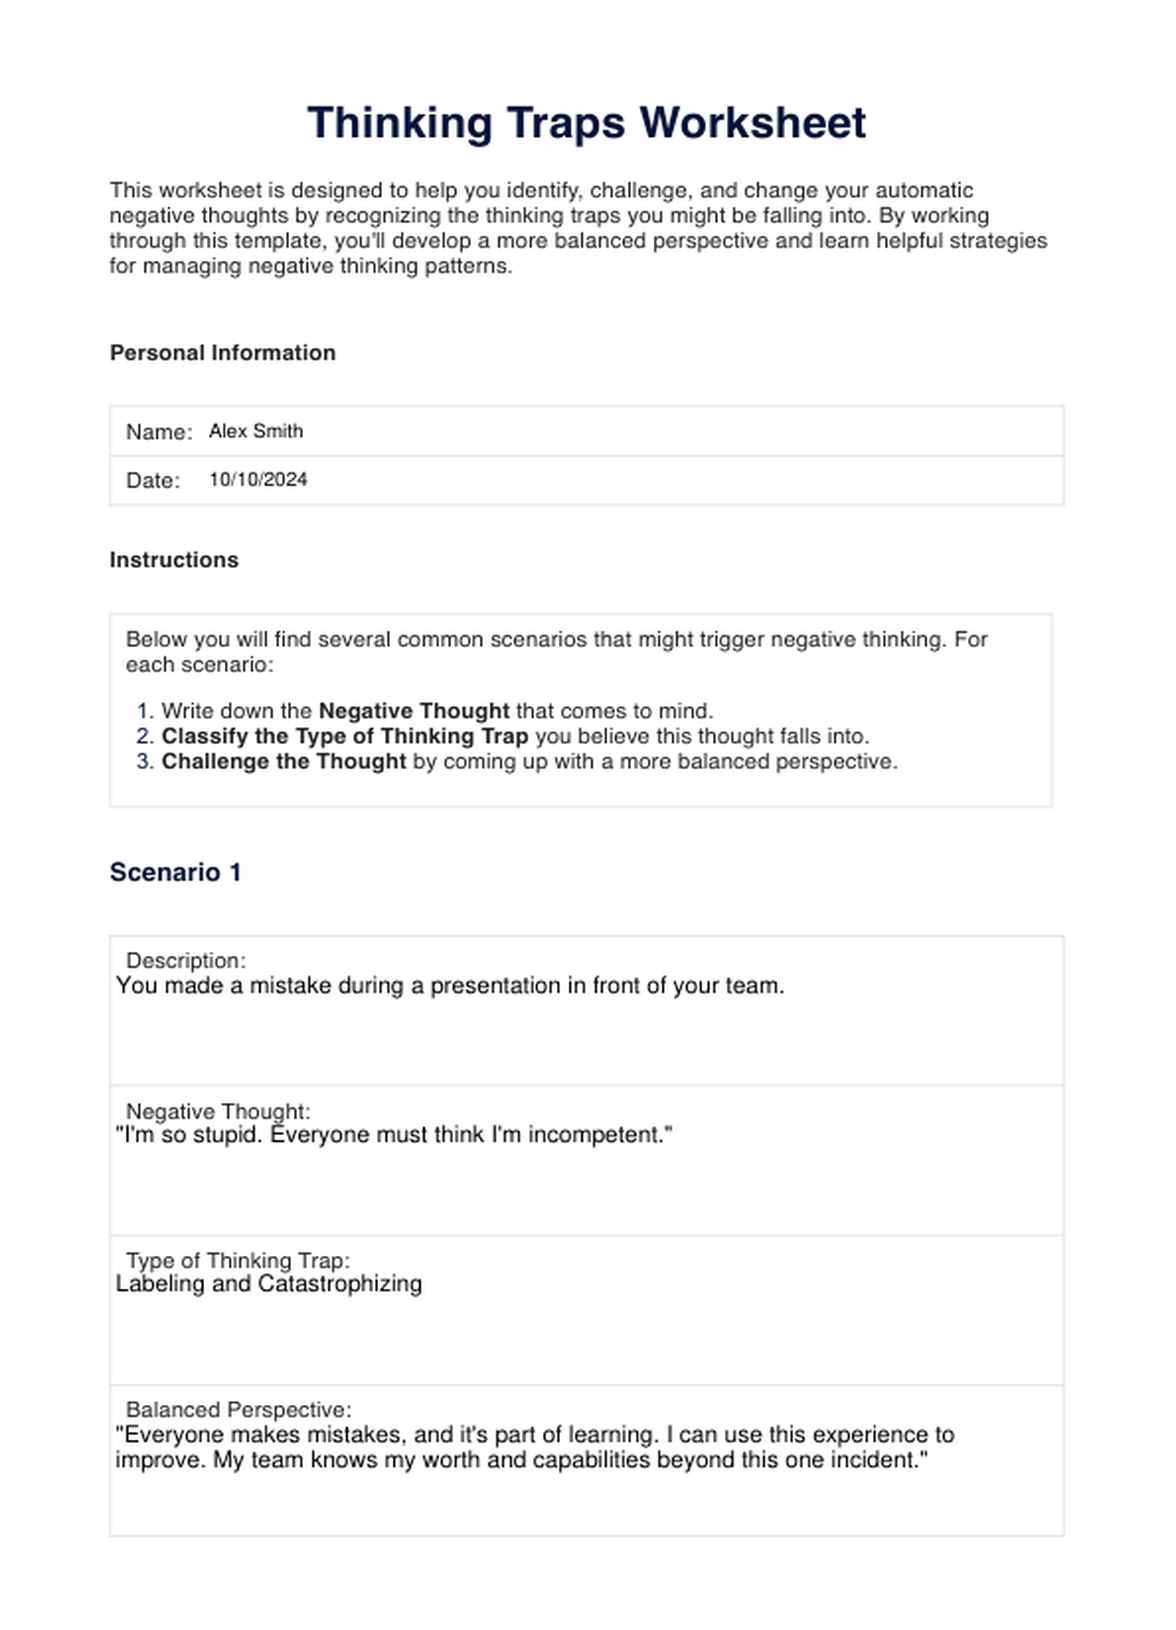 Thinking Traps Worksheet PDF Example